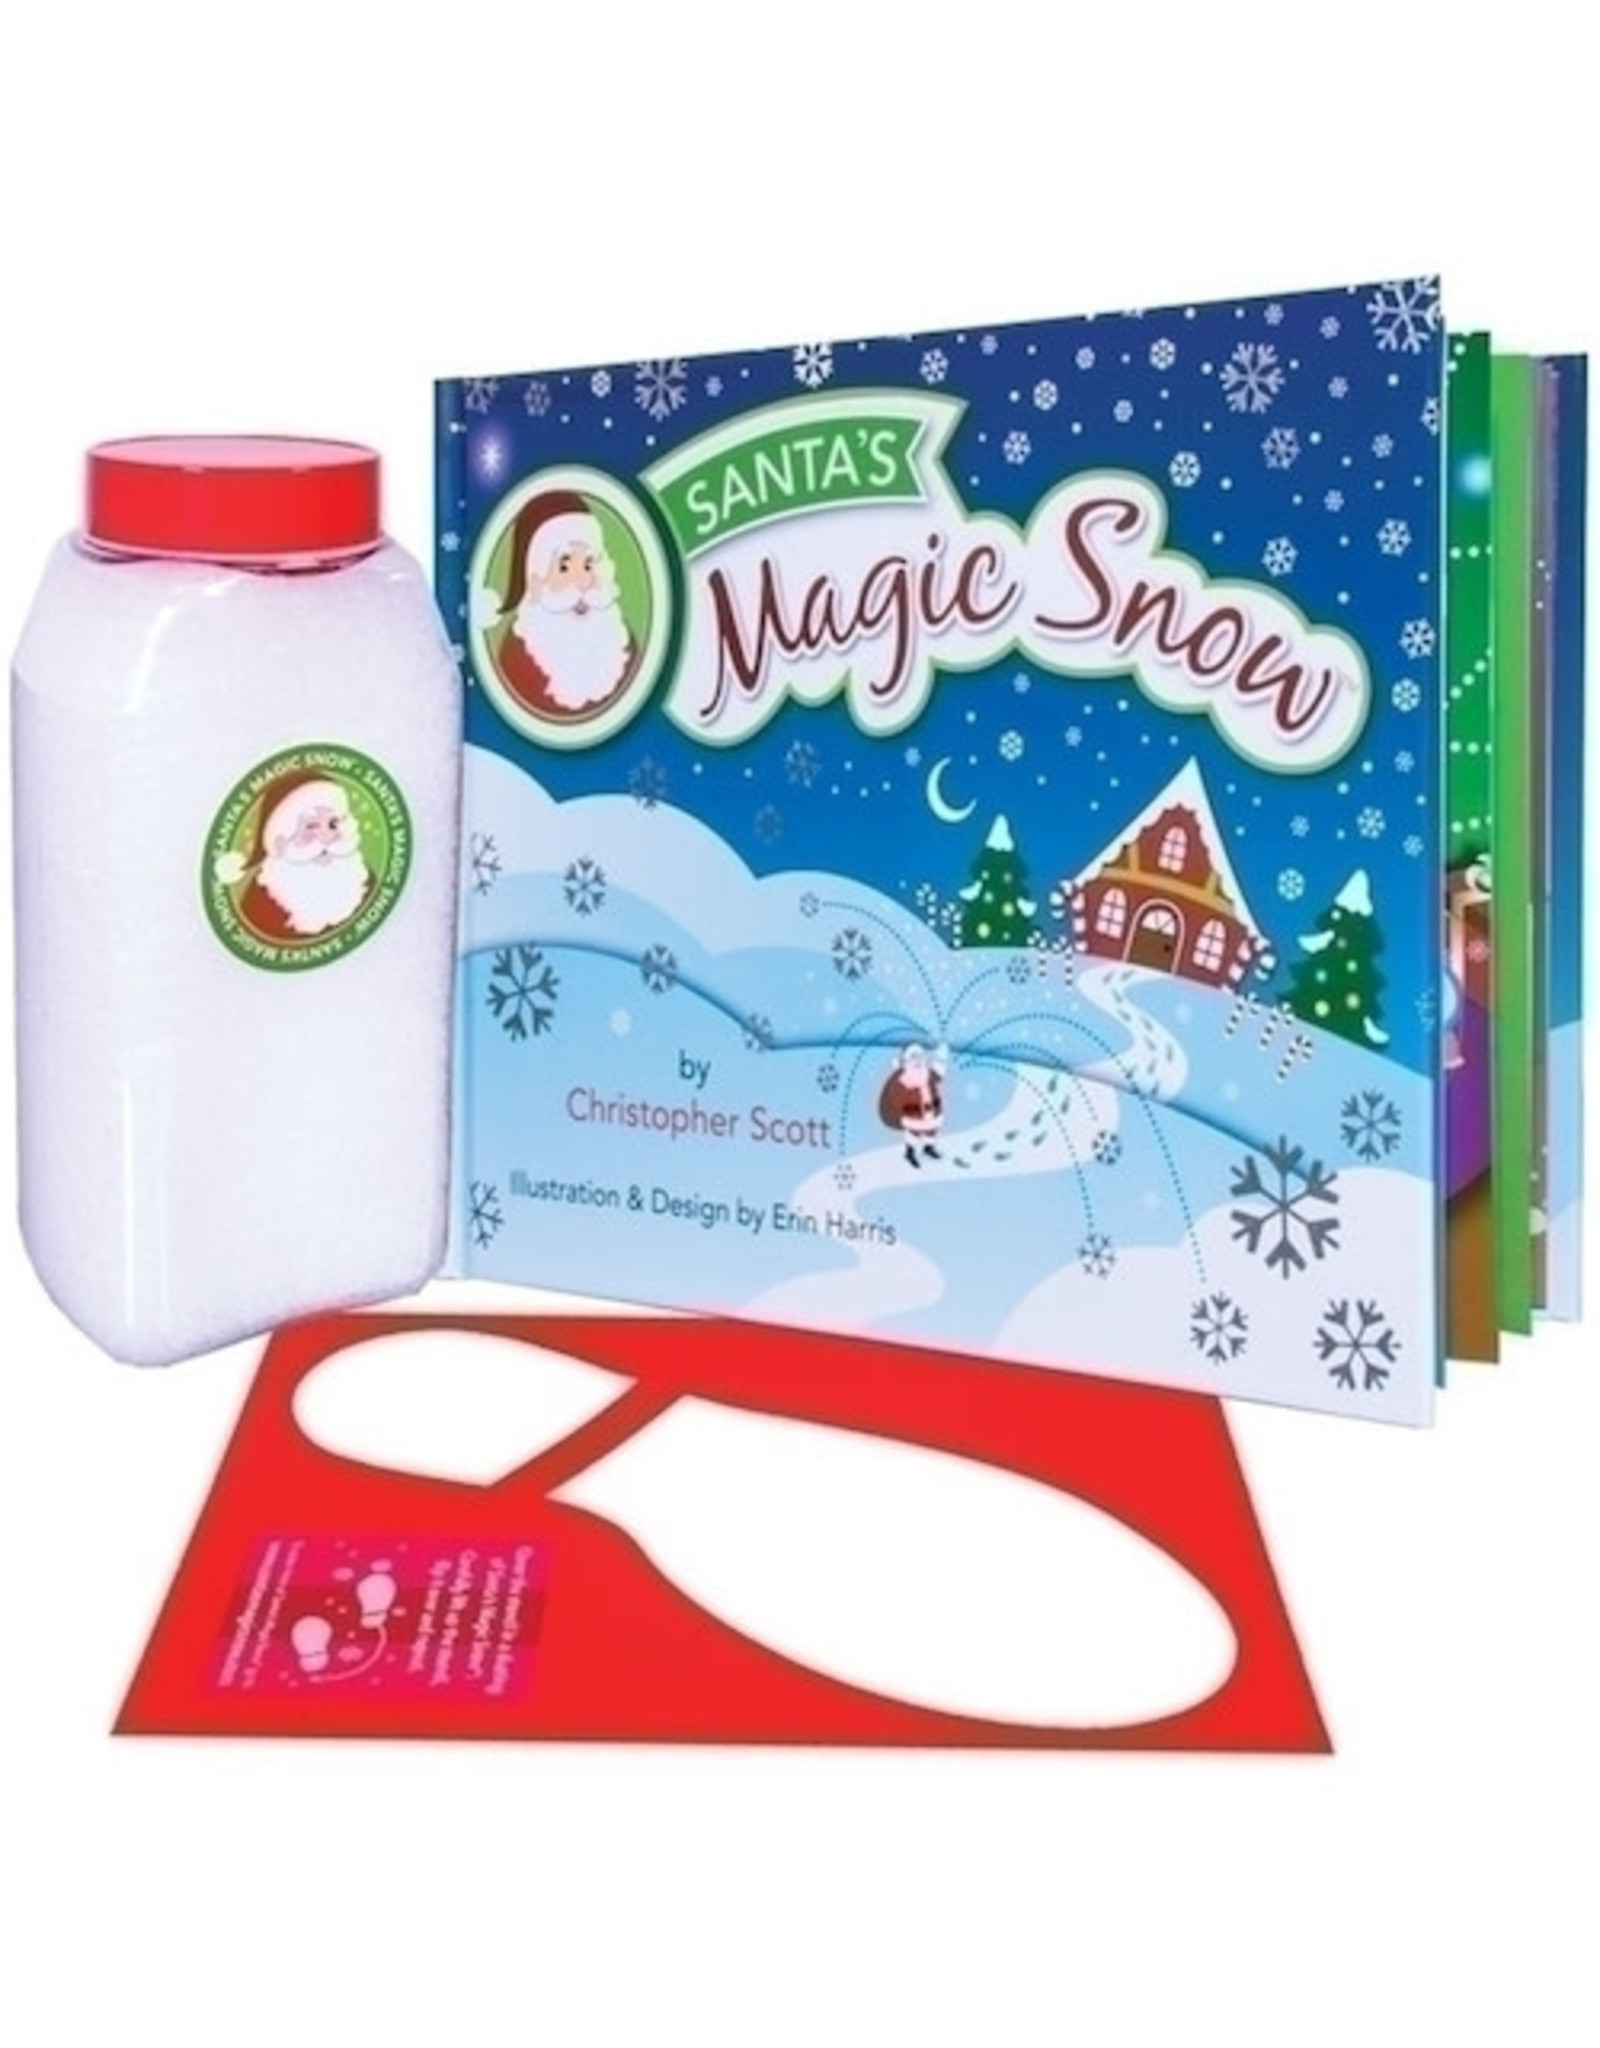 Santa's Magic Snow w/ Book